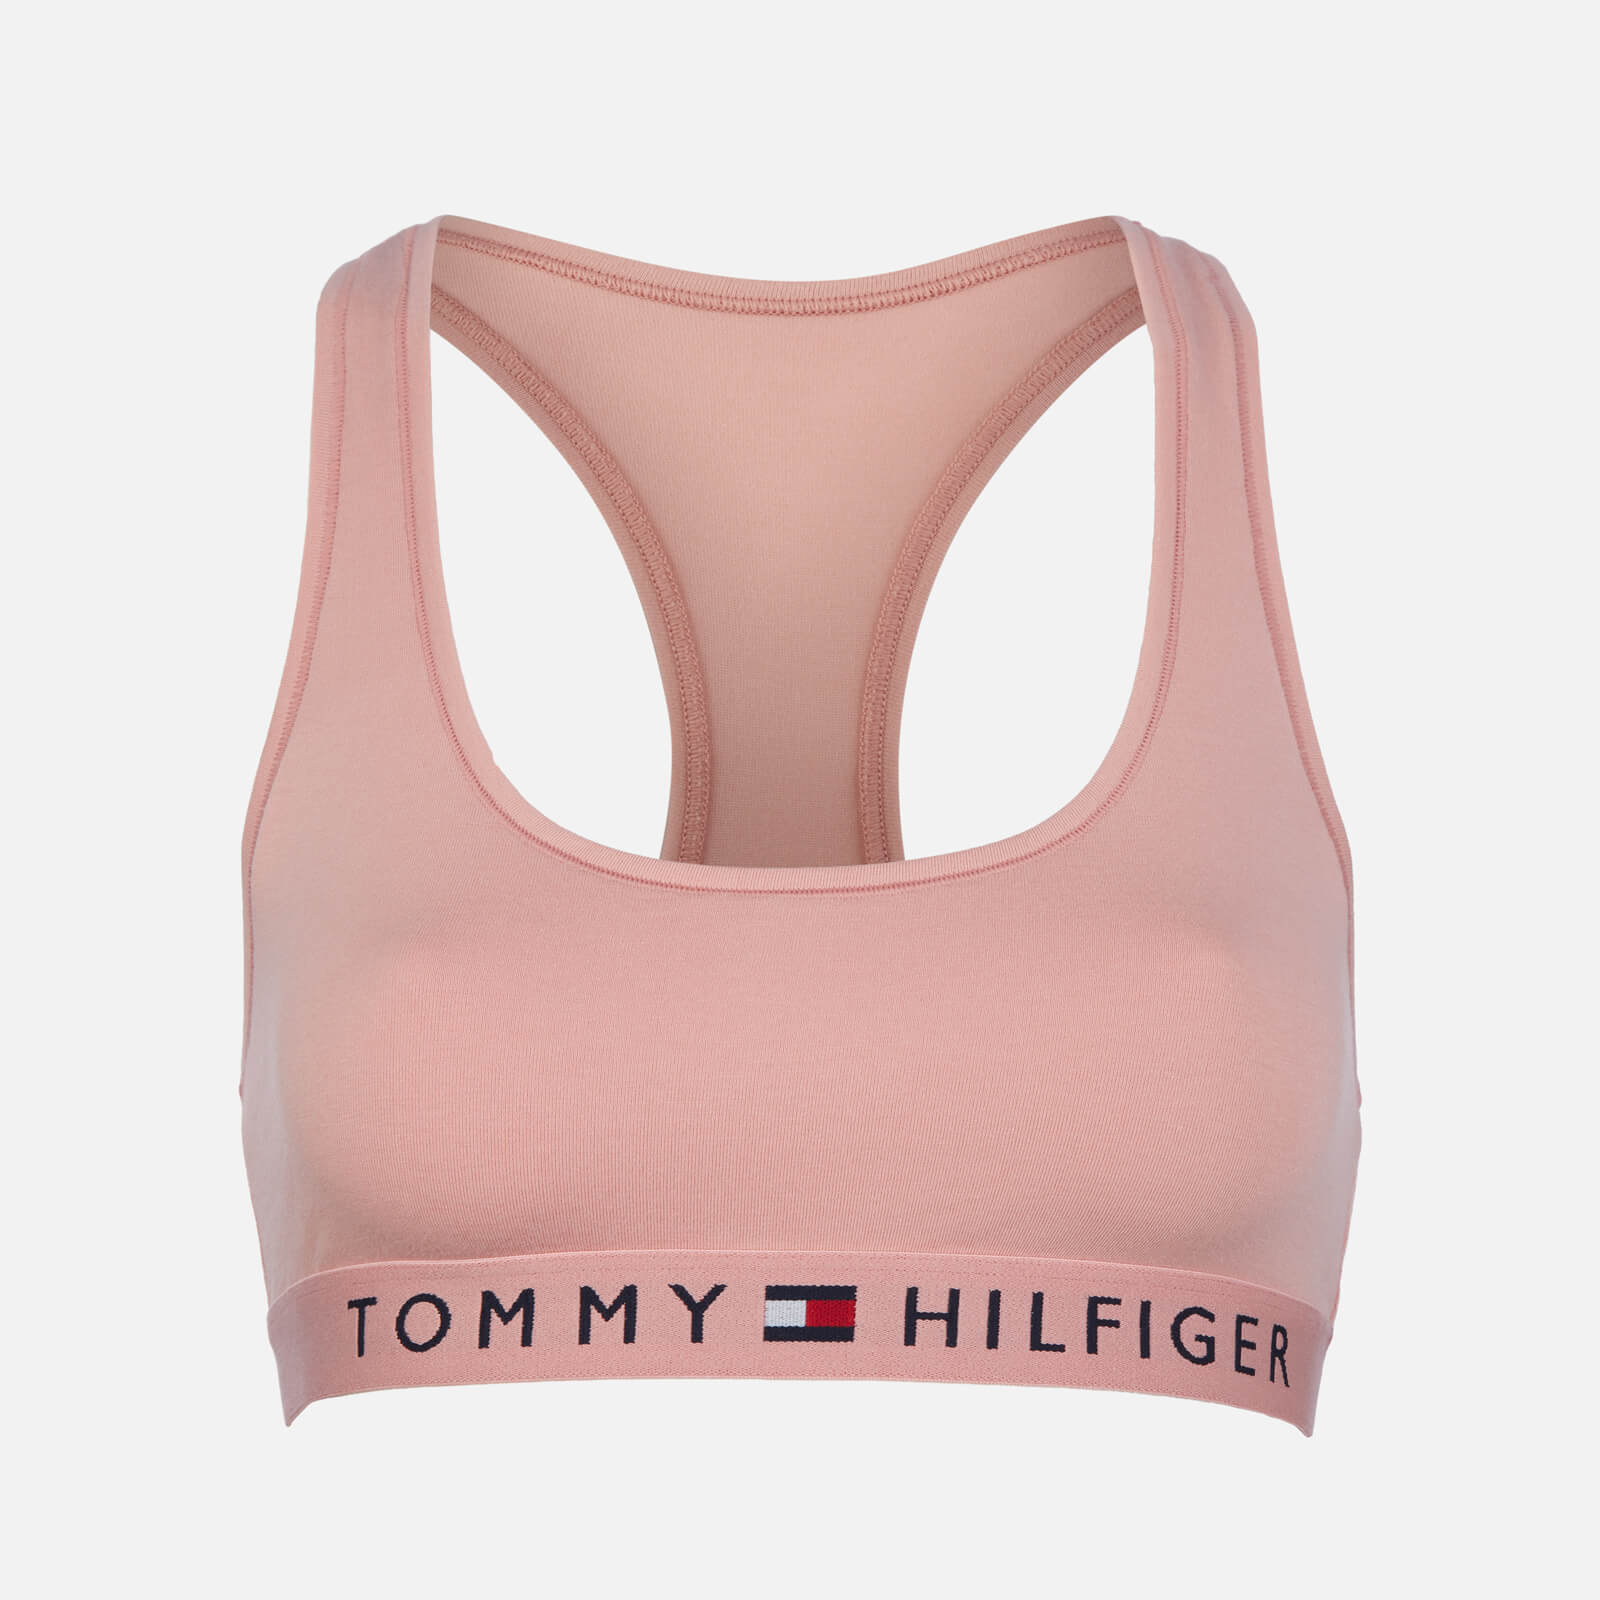 Tommy Hilfiger Women's Original Cotton Bralette - Rose Tan - L